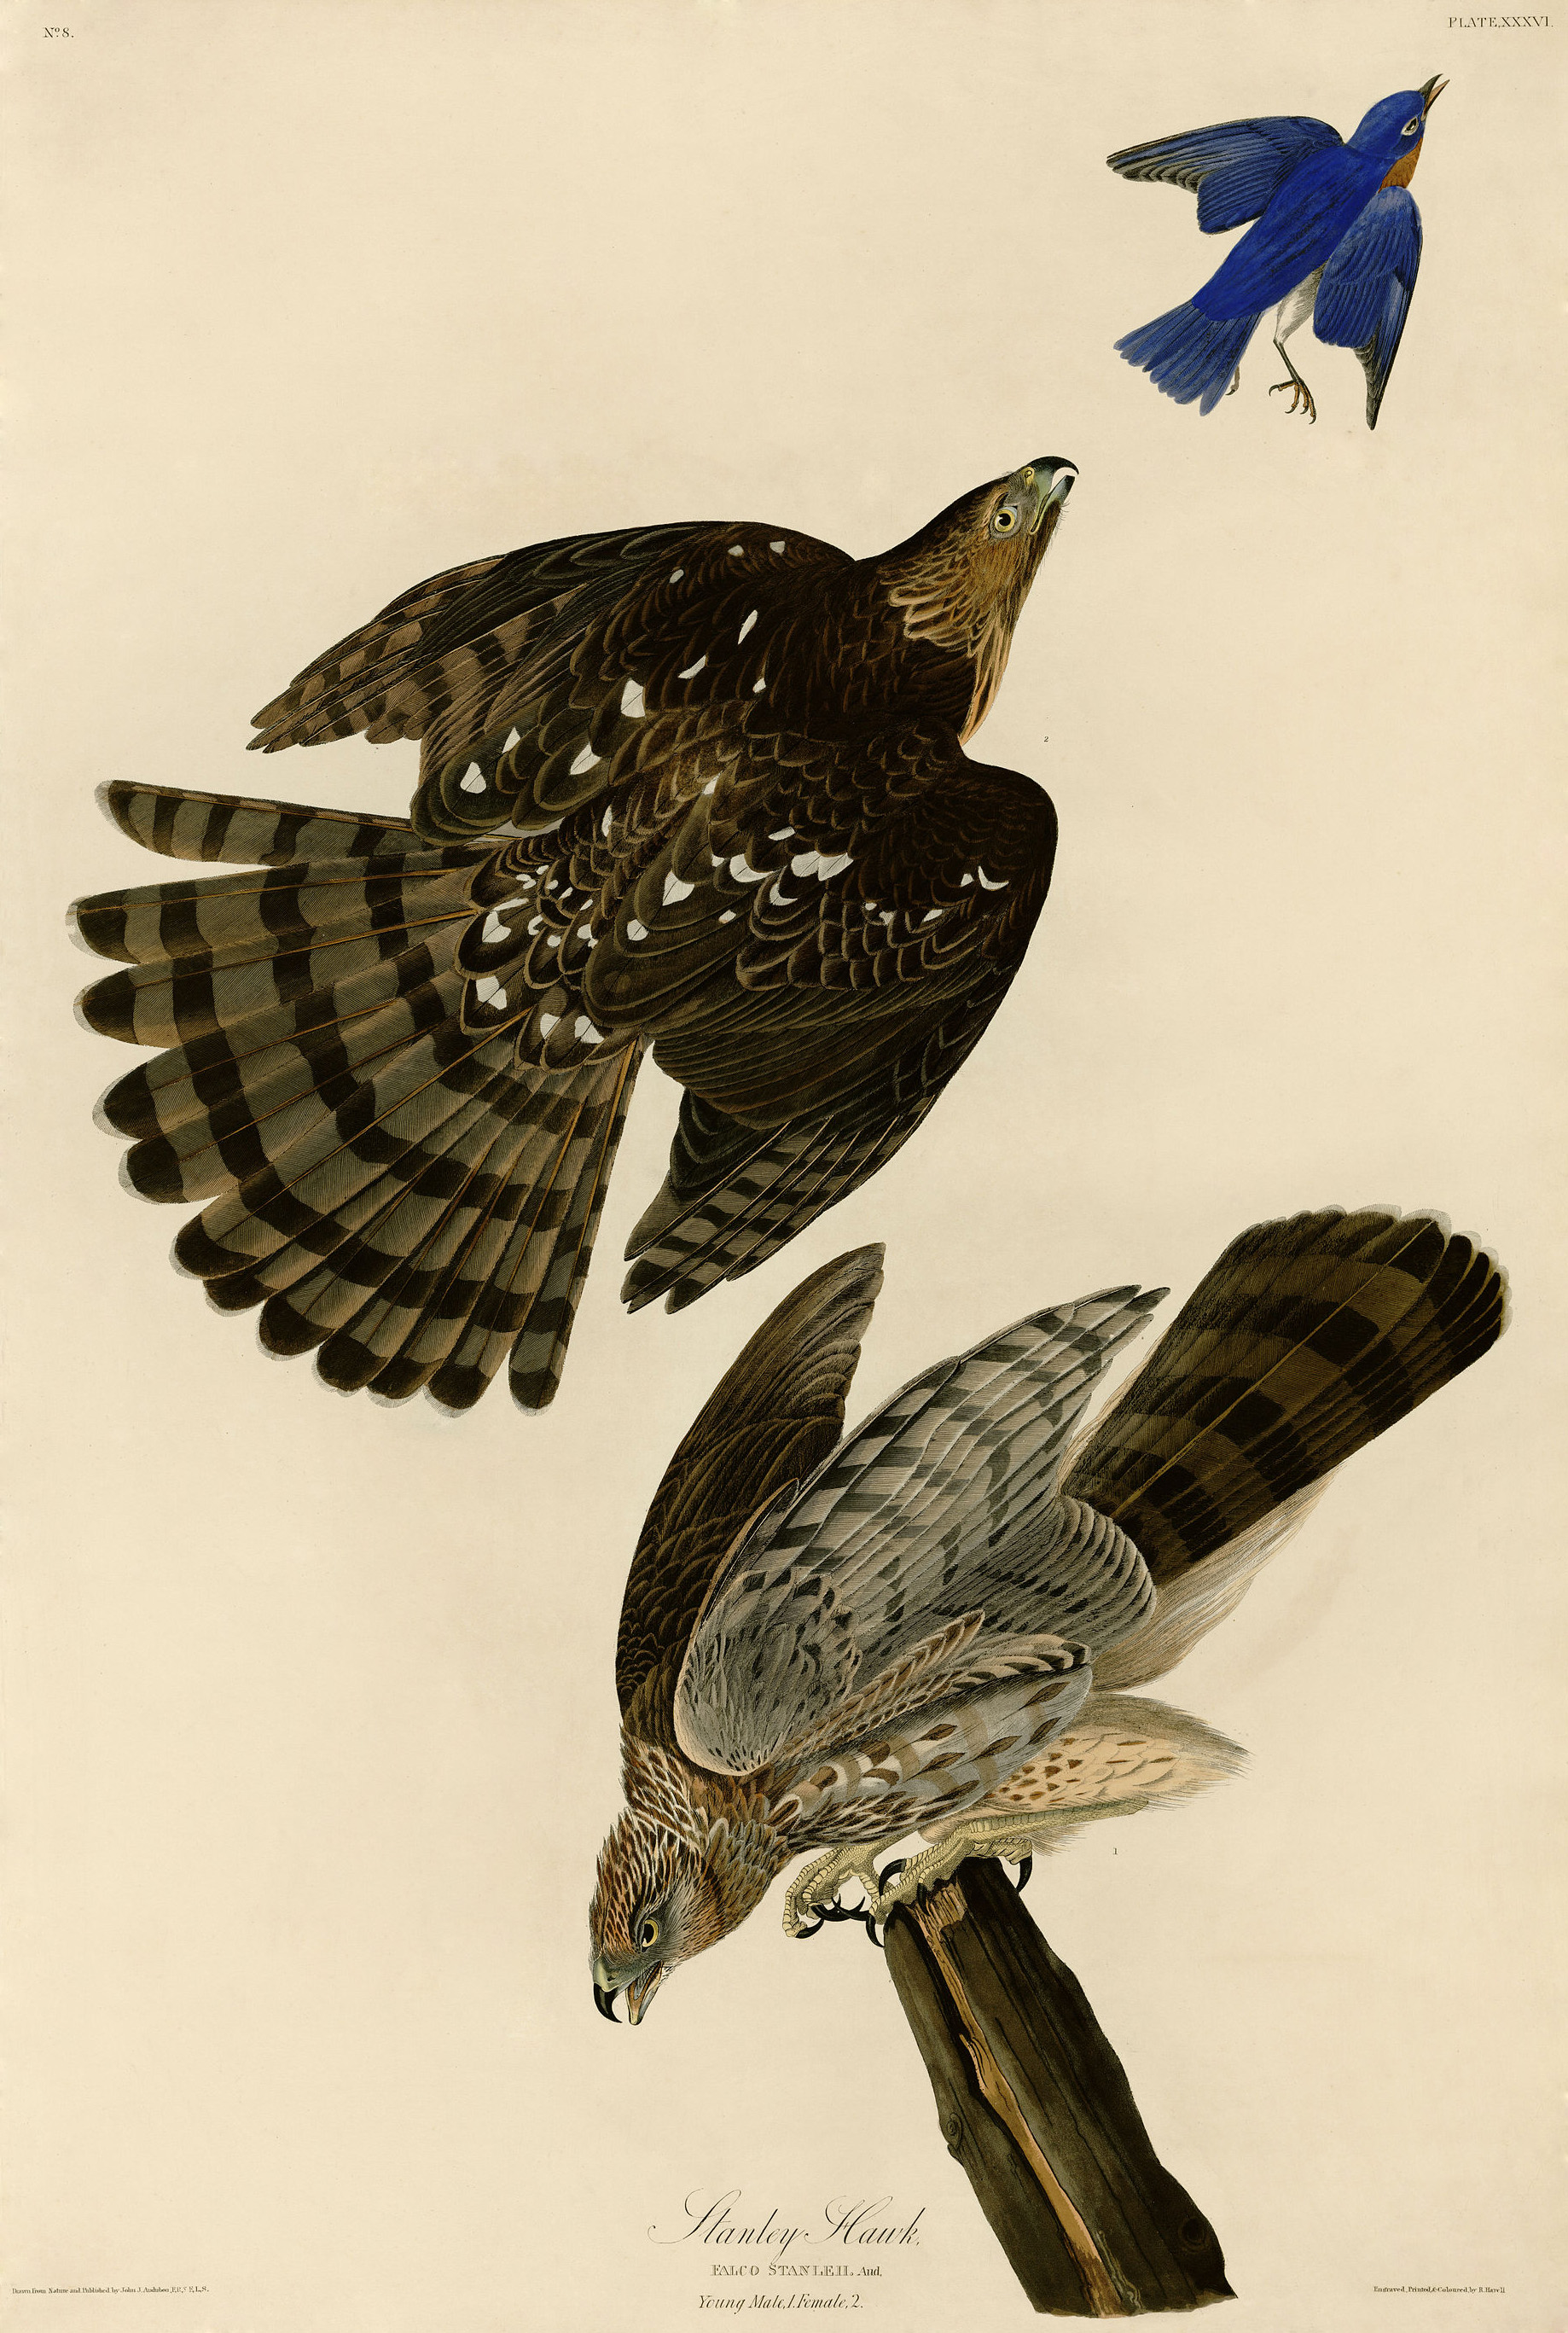 Stanley Hawk (Audubon)